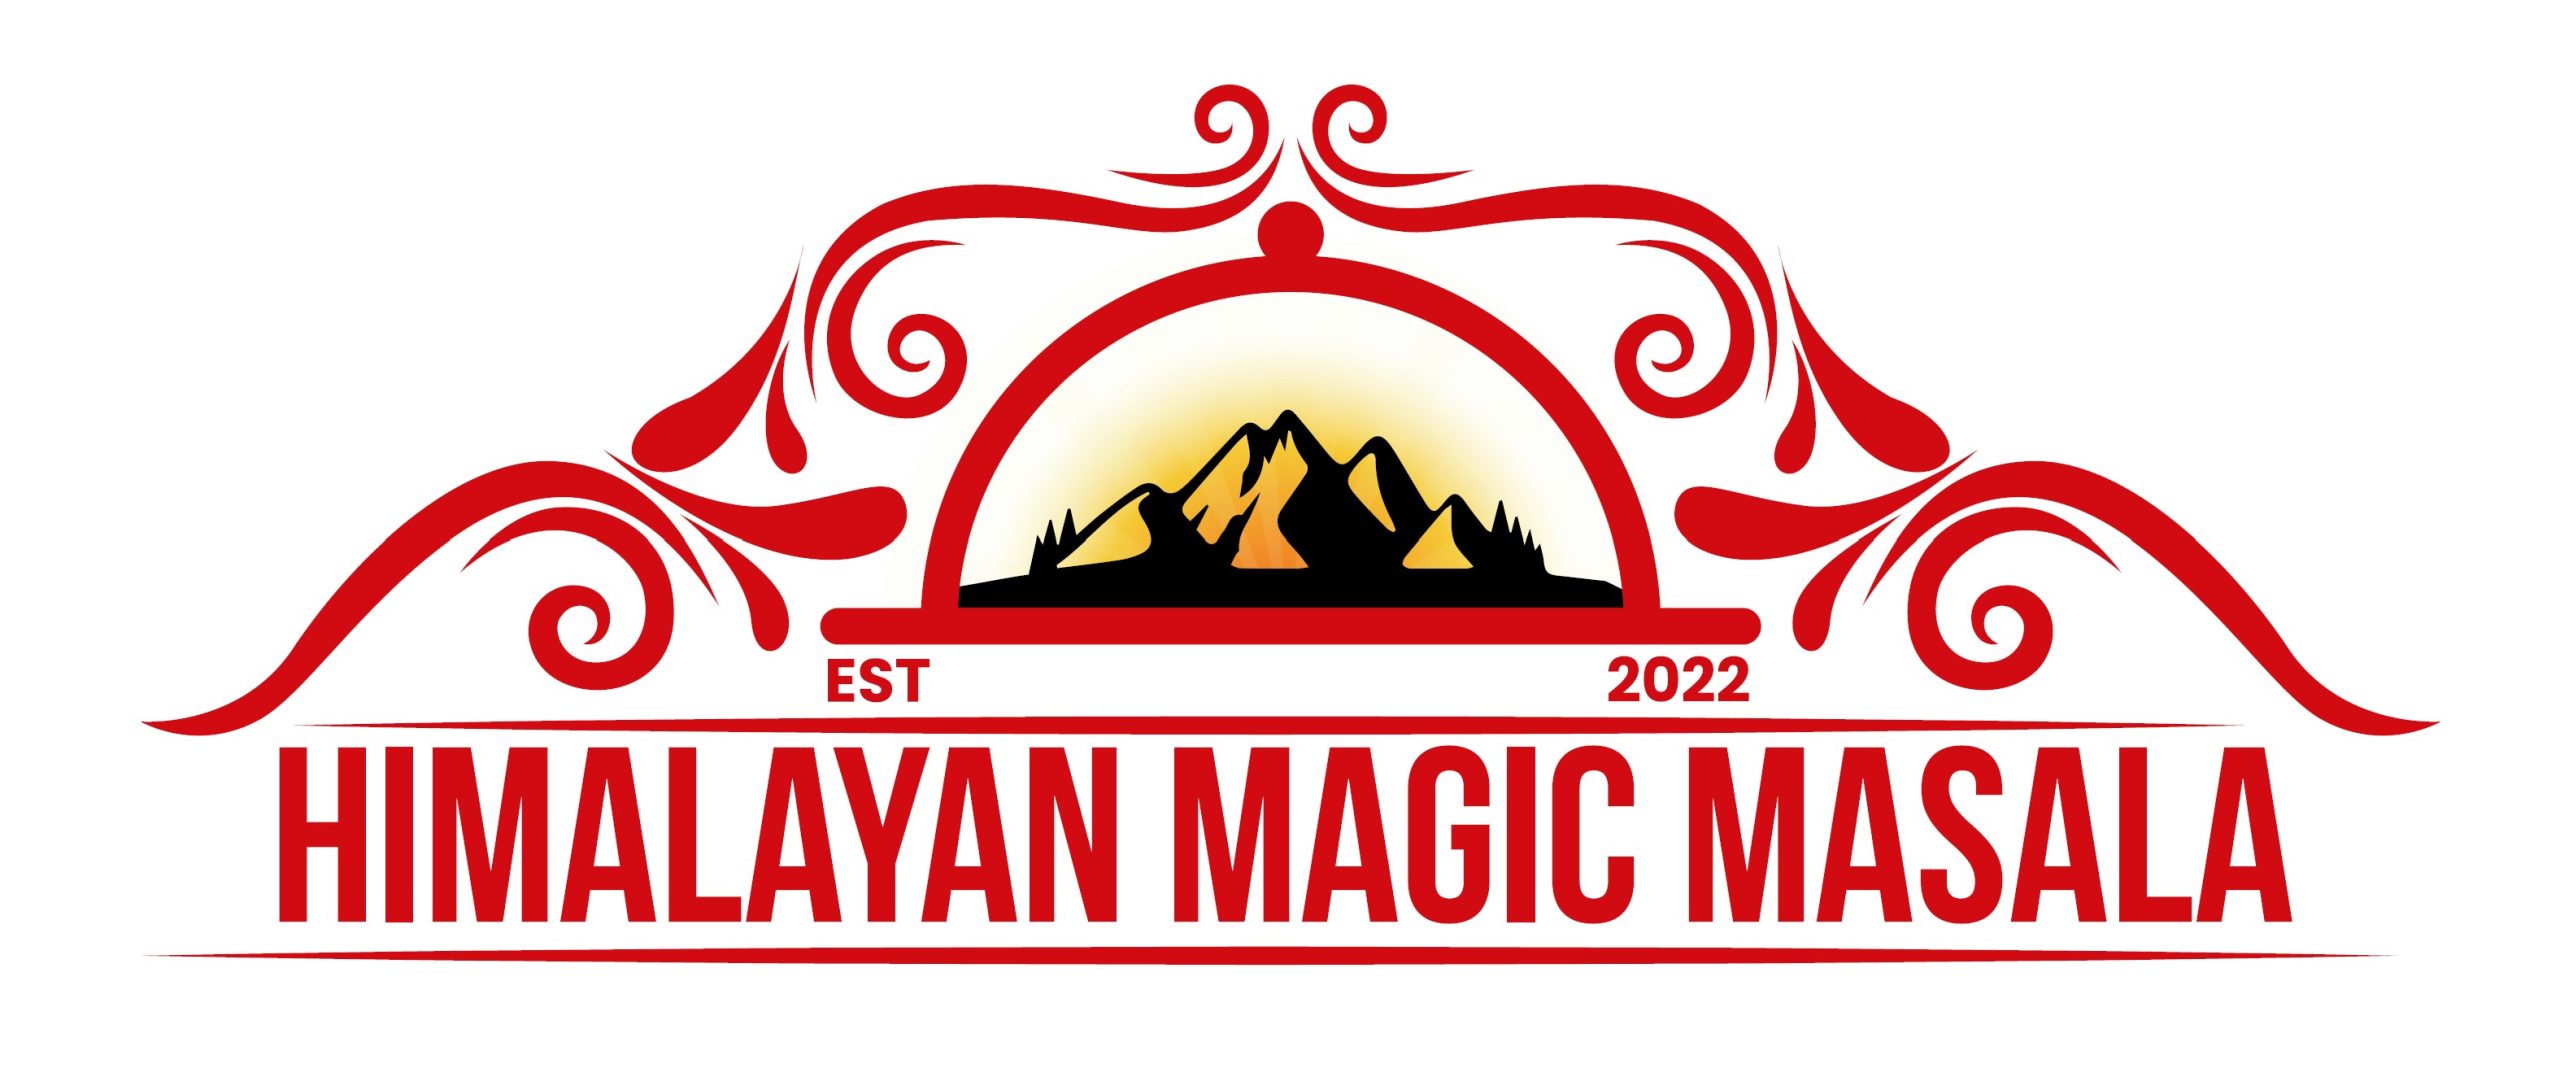 Himalayan Magic Masala